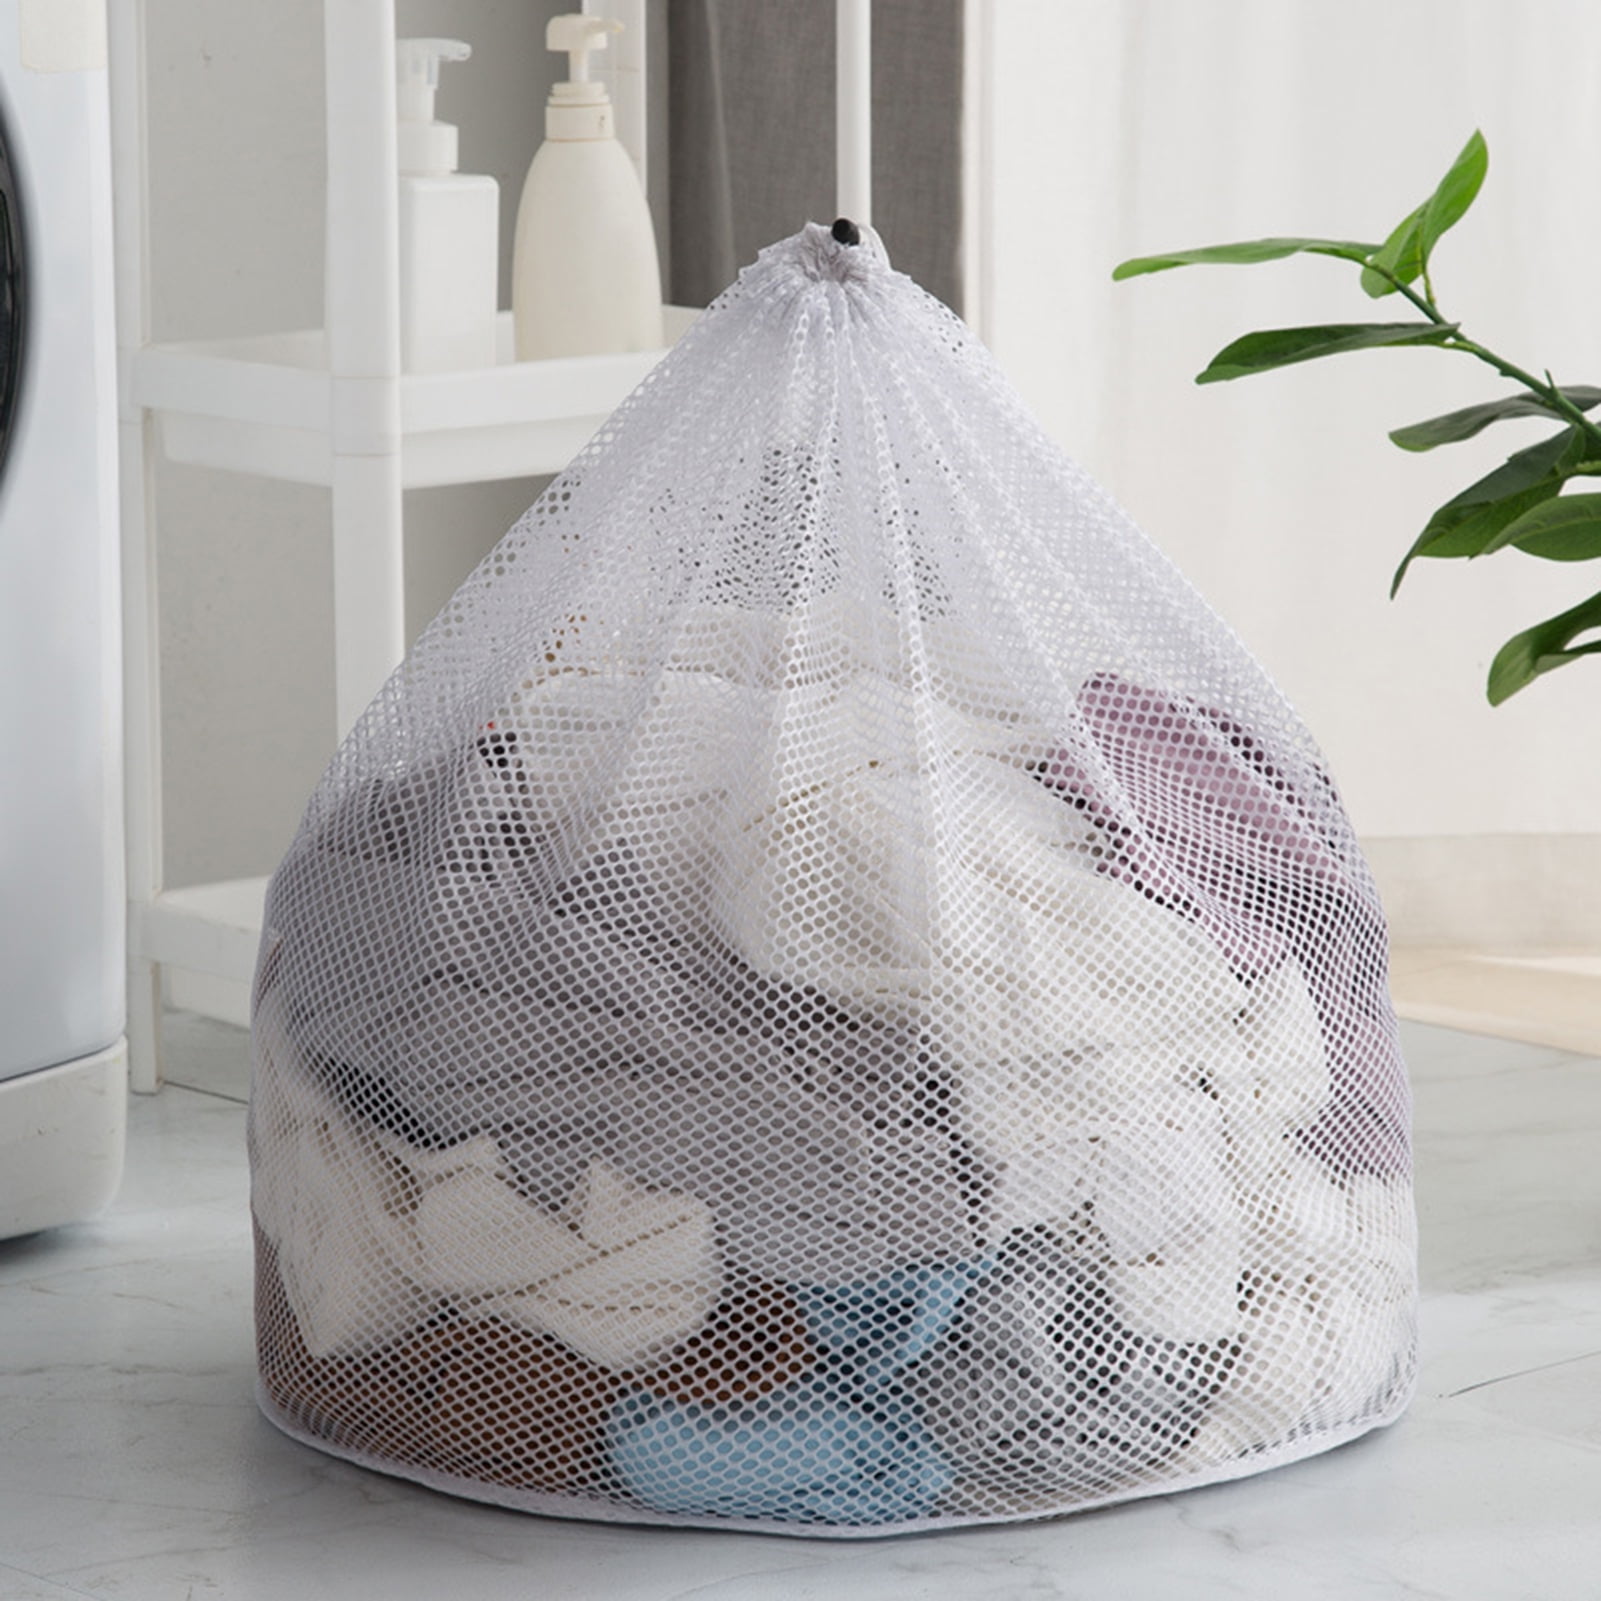 Big Clear!]Washing Net Bags,Durable Coarse Mesh Laundry